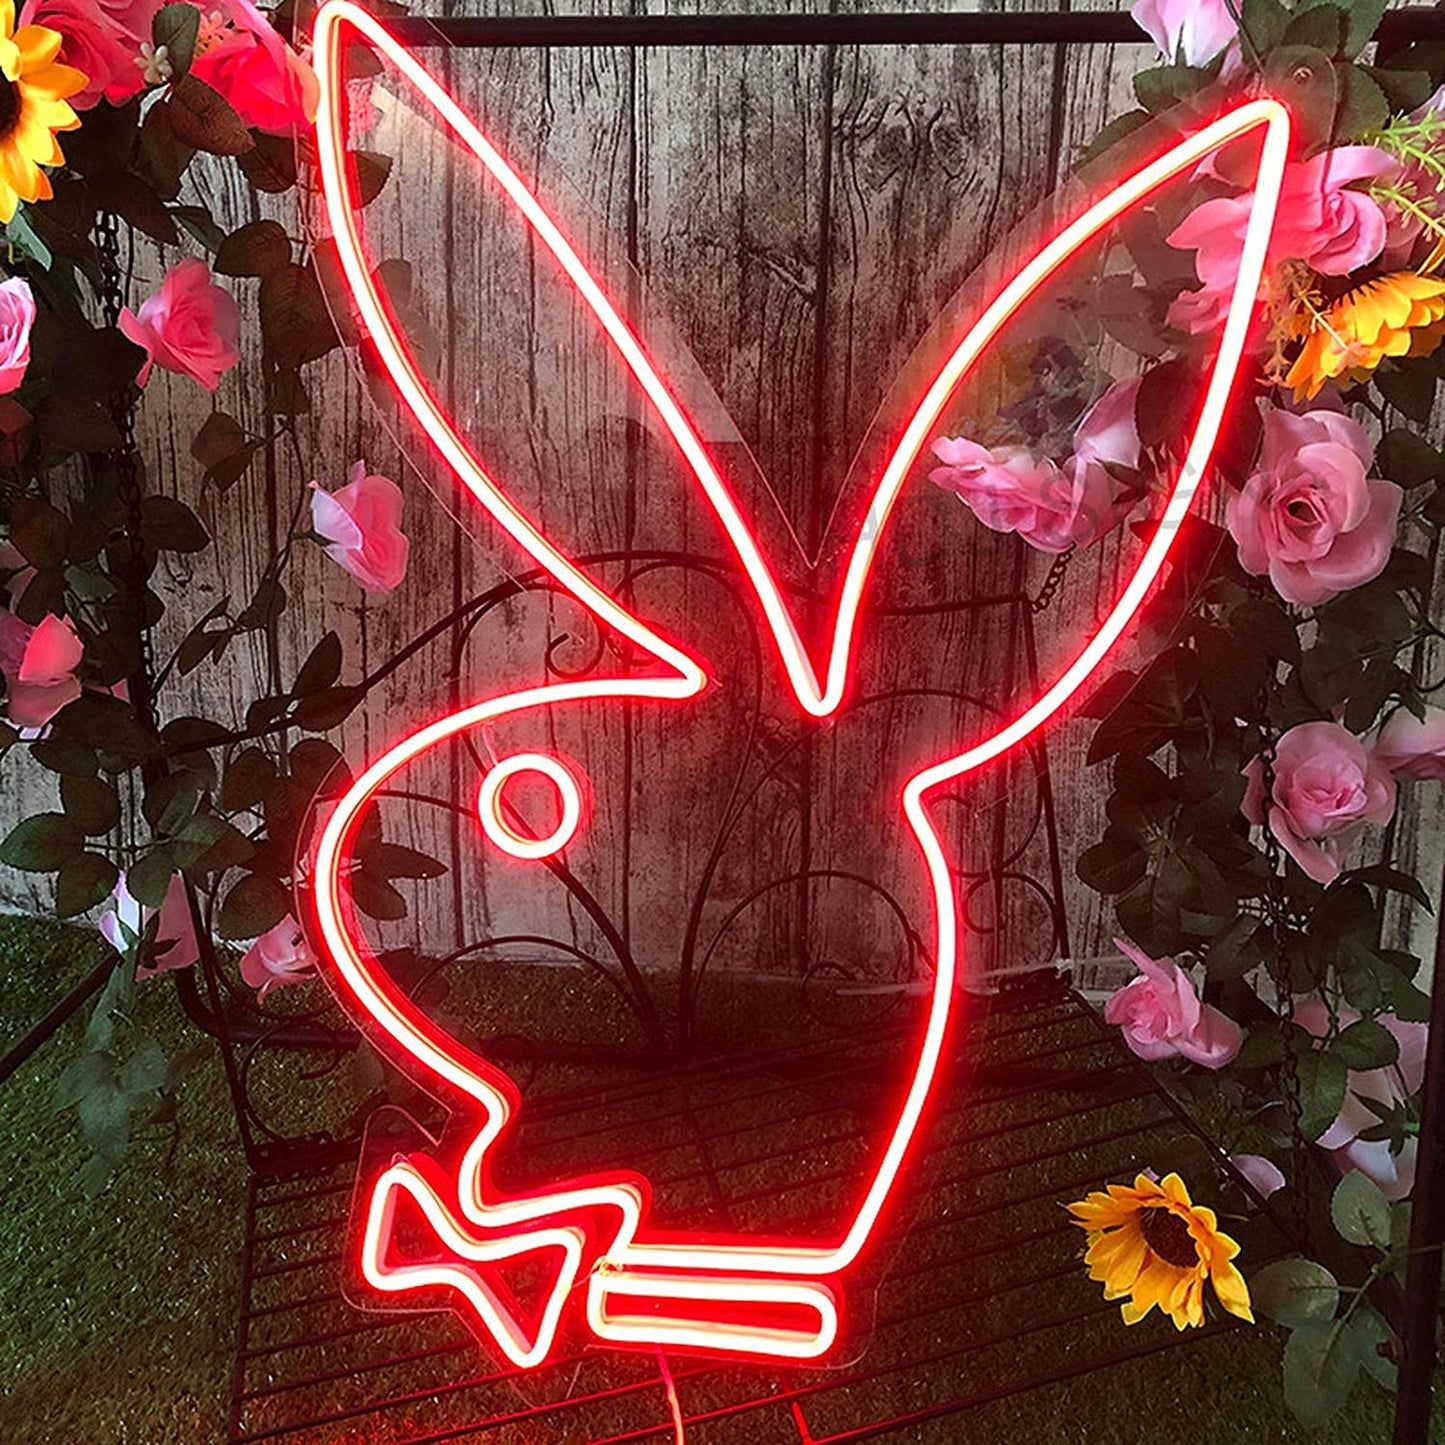 40cm Playboy Bunny LED Neon Light  Sign Wall Bar Living Room Decor Neon Lamp Design Neon Light Gift For Friend 6 Colors